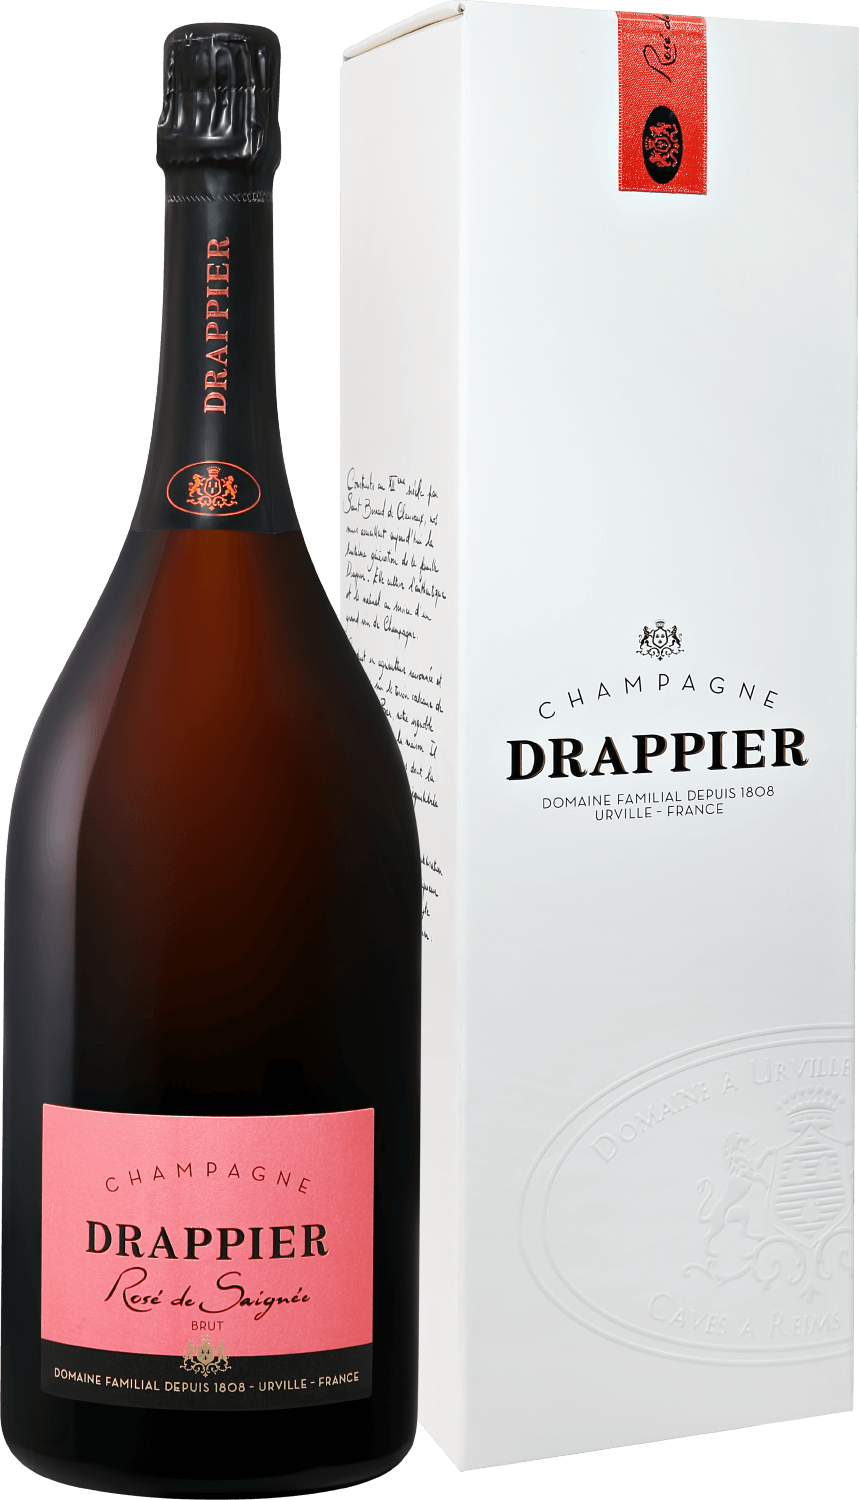 Drappier Brut Rose Champagne AOP (gift box) ultradition brut champagne aoс laherte freres gift box